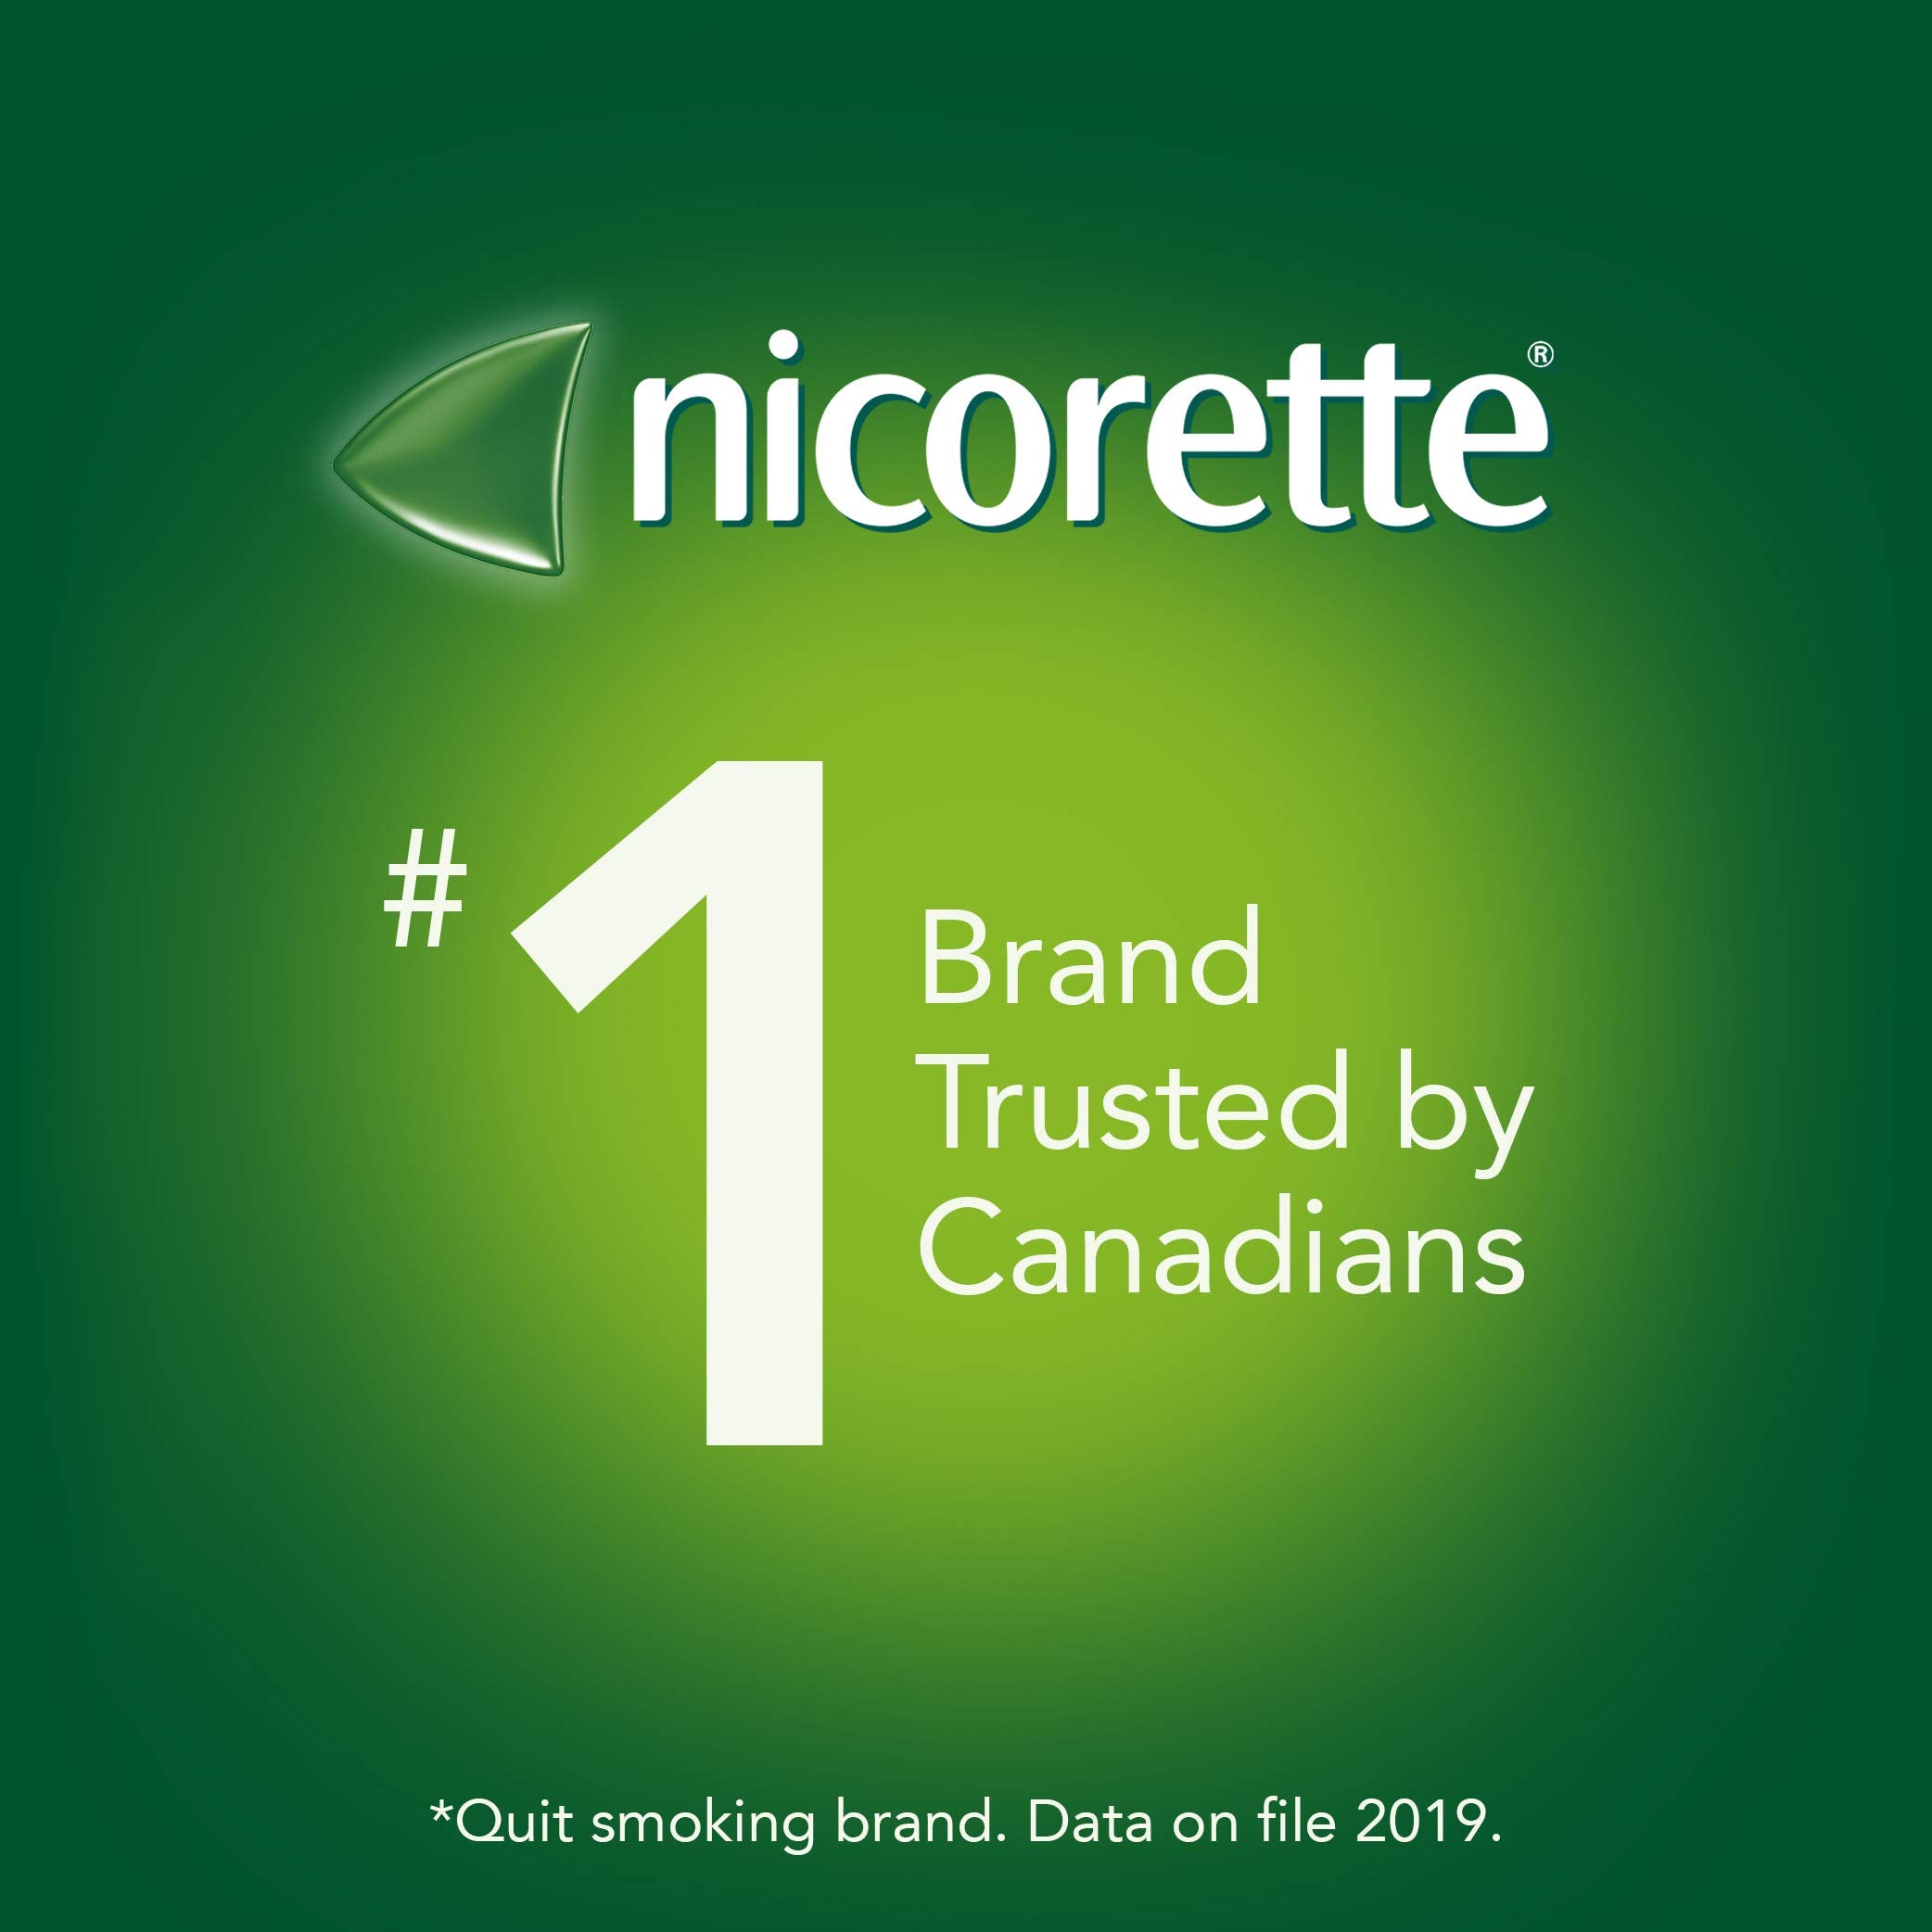 Nicorette Gum, Nicotine 2mg, Fresh Fruit Flavour, Quit Smoking Aid and Smoking Cessation Aid, 315 Count